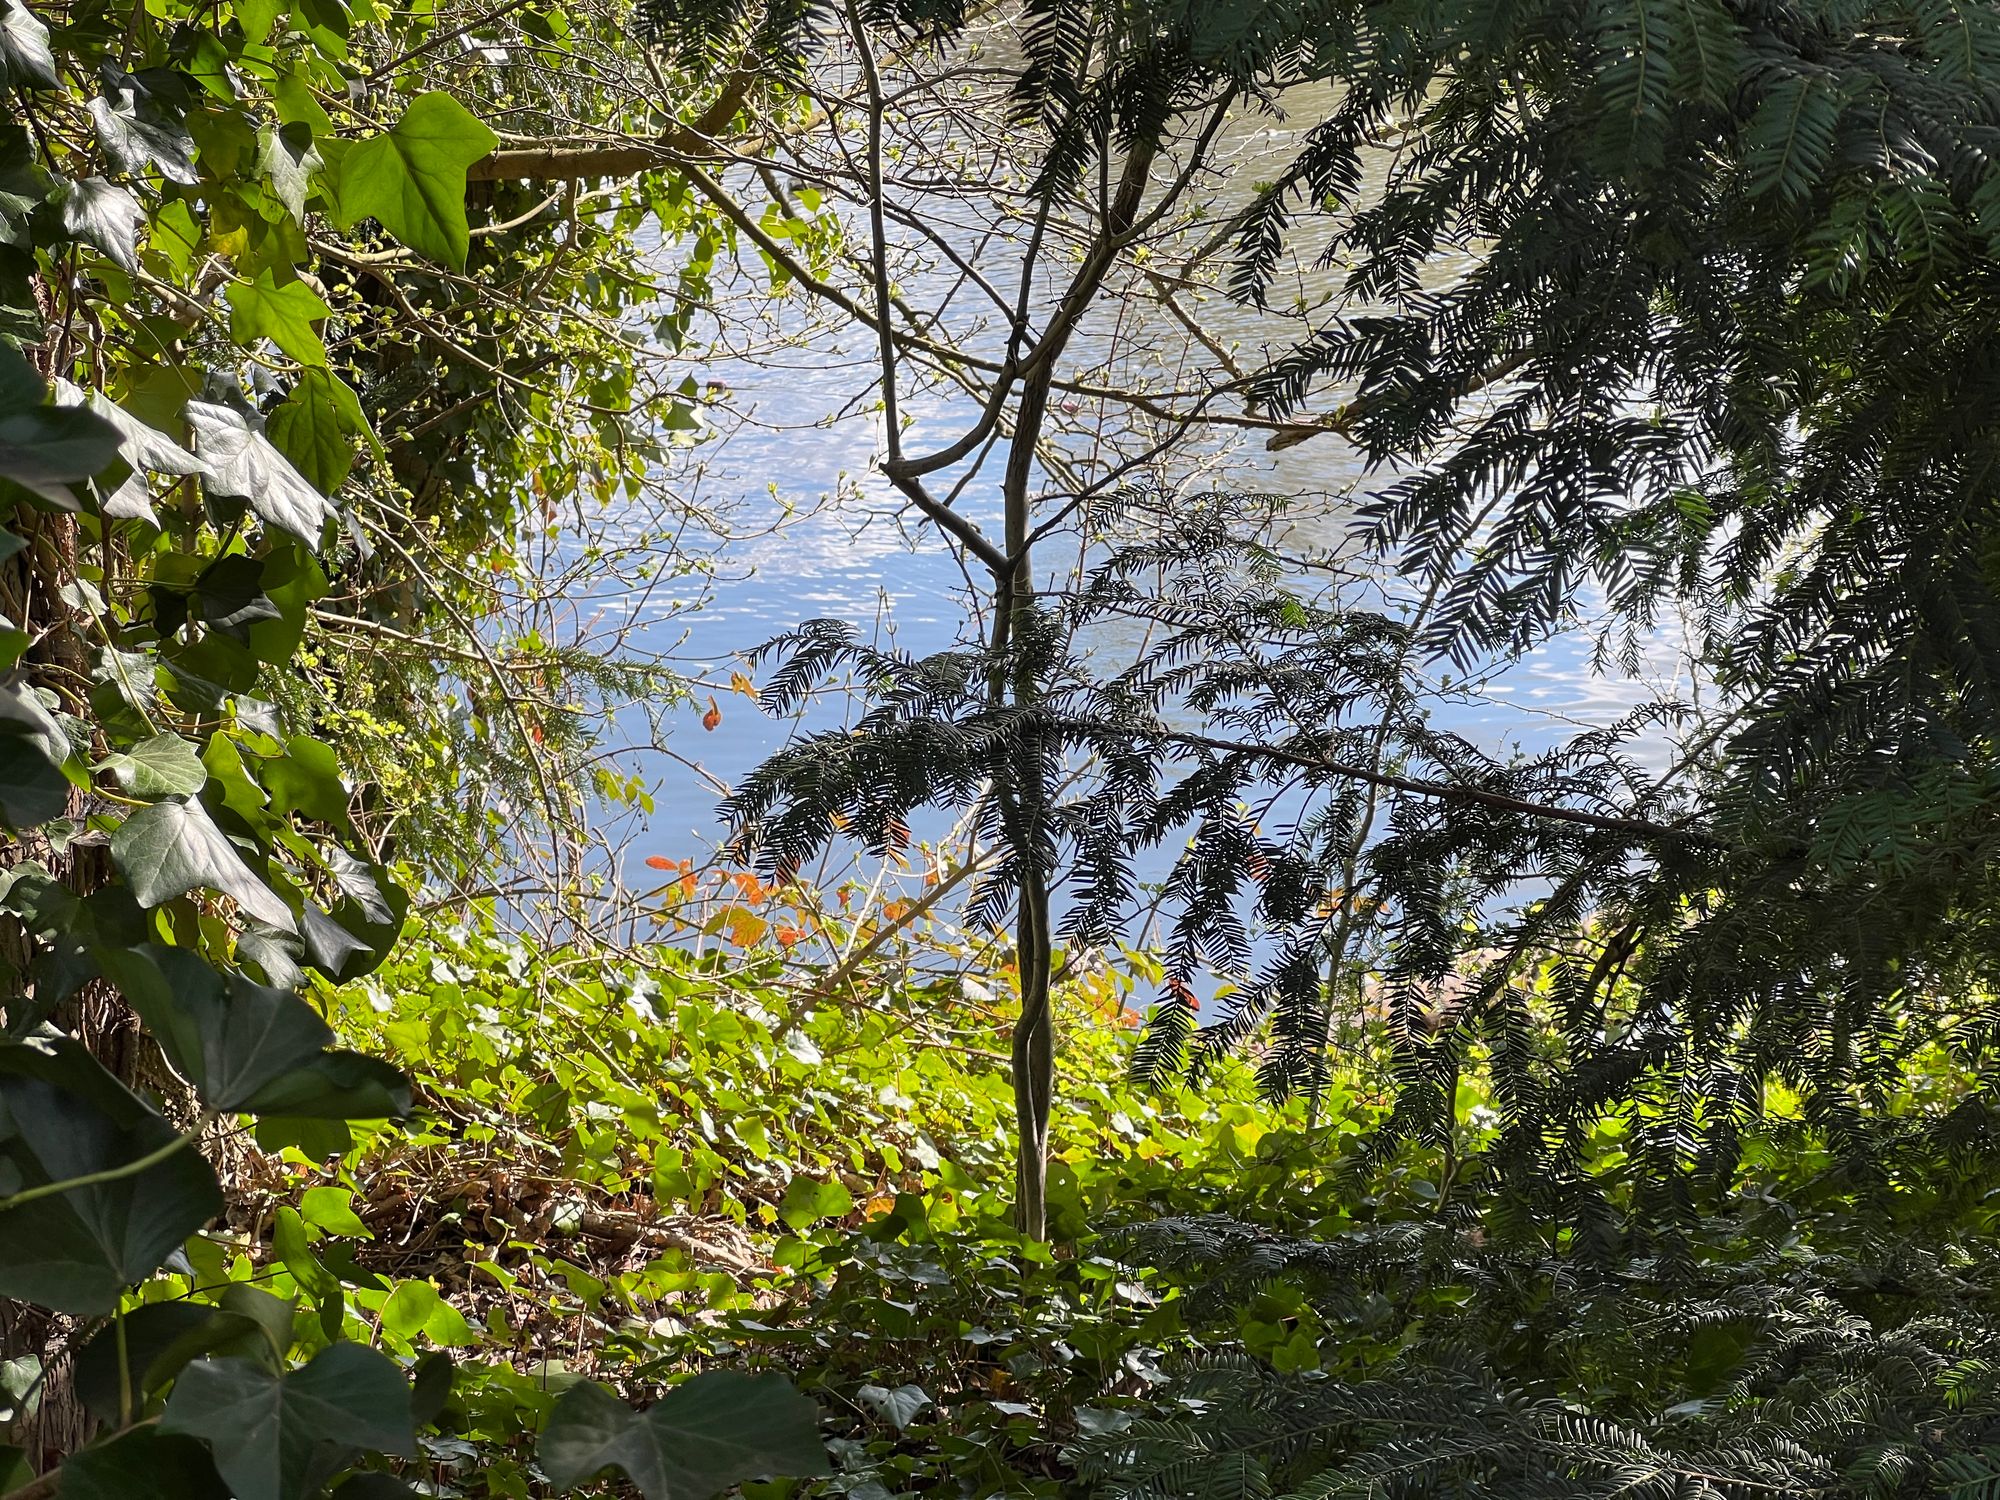 A pond seen through some dense foliage on a warm, sunny day.